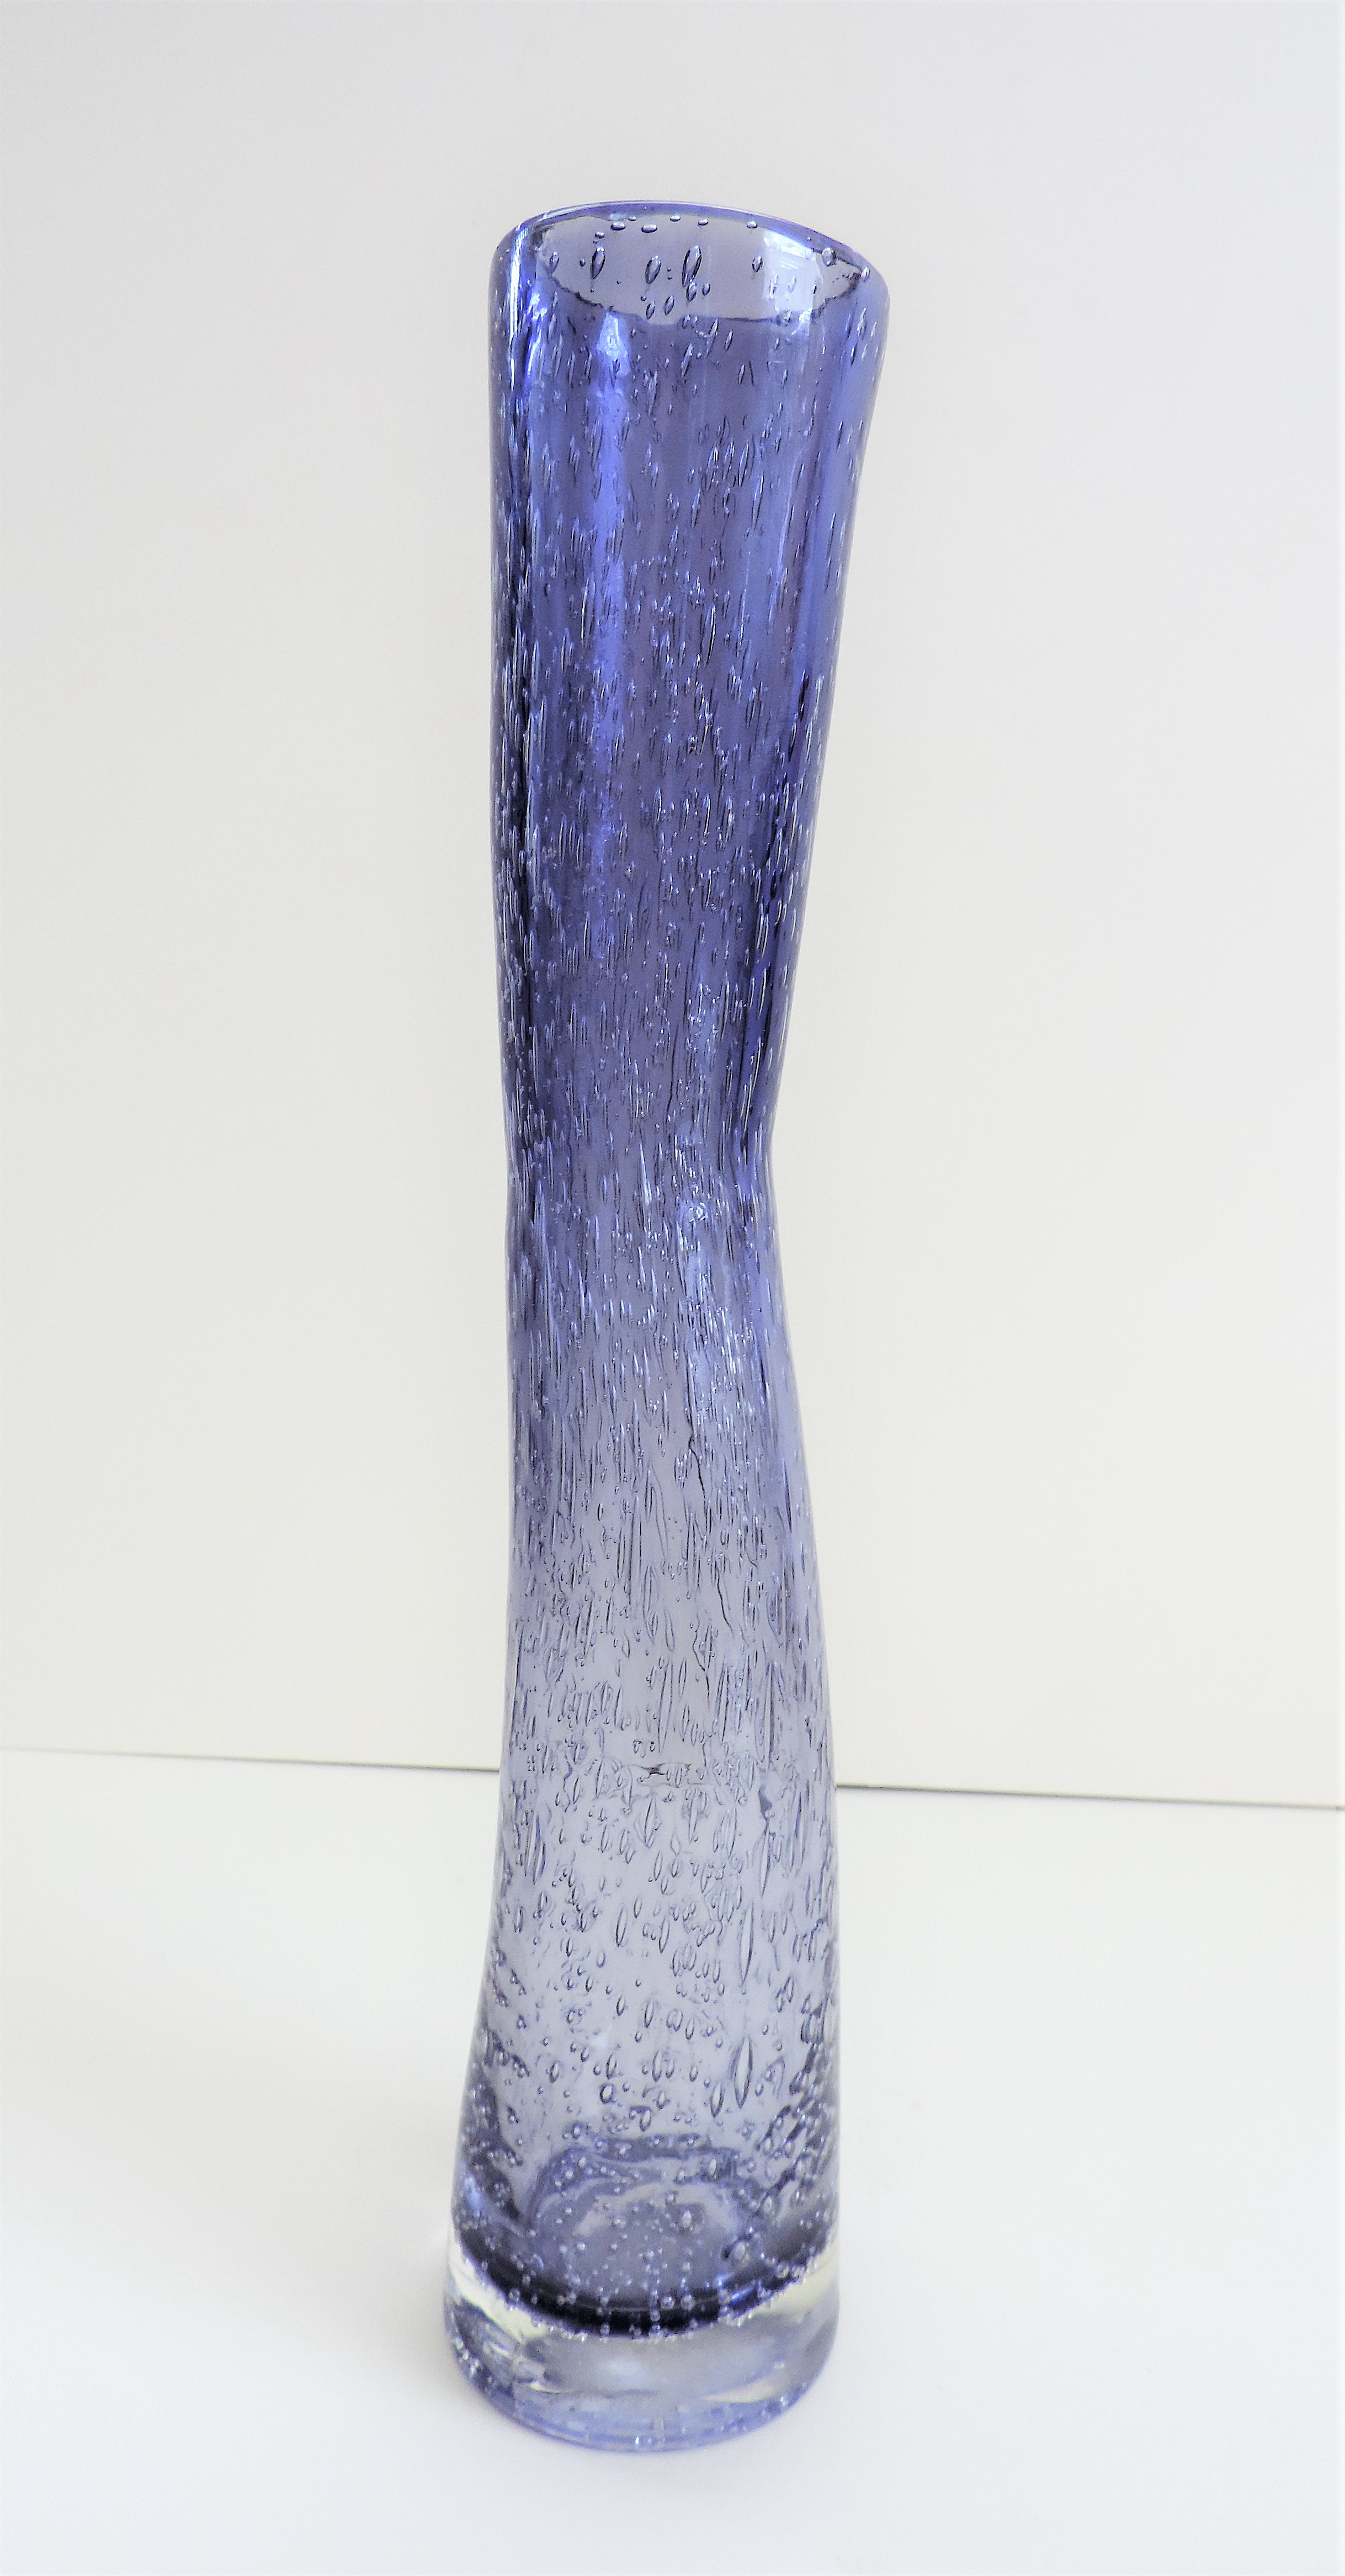 Wonky Art Glass Vase 29cm tall - Image 3 of 5